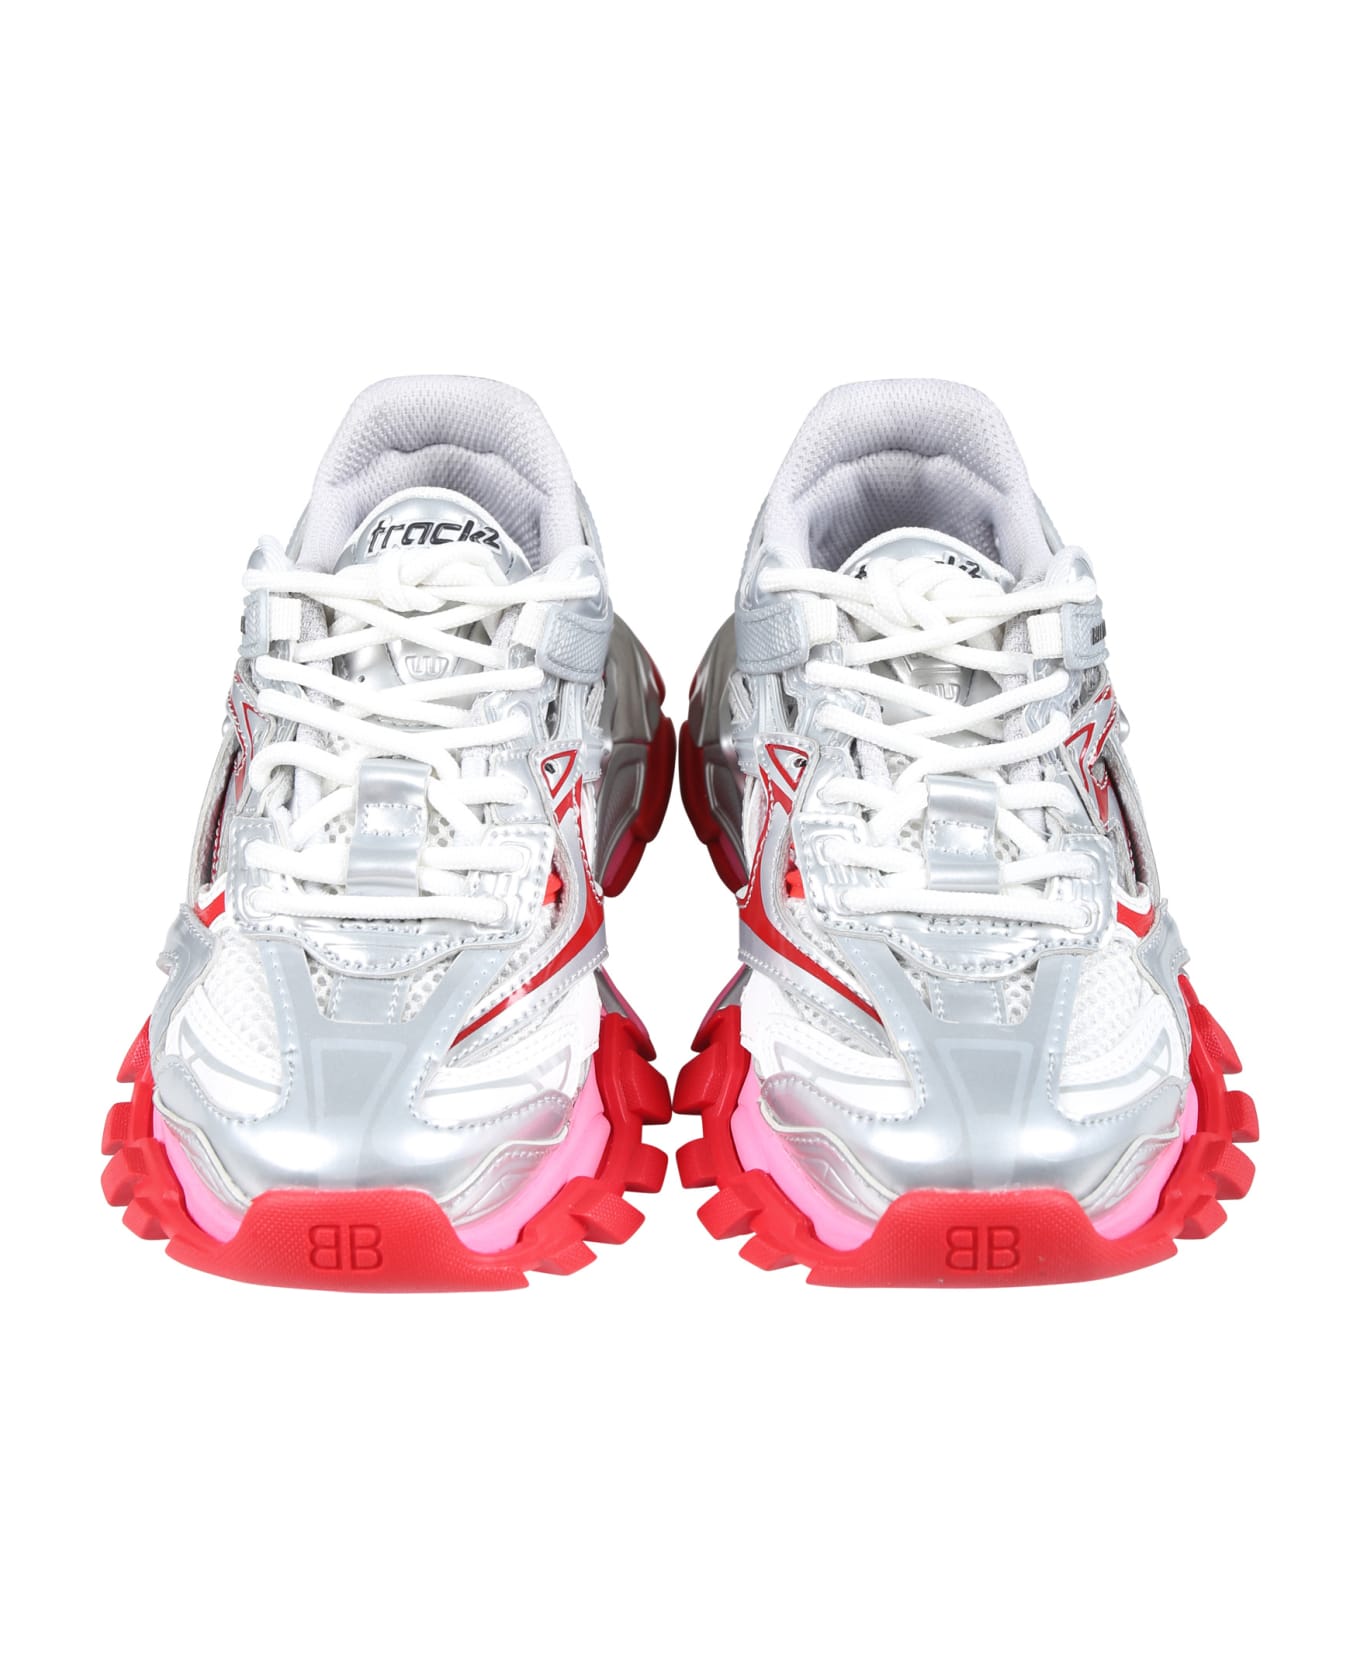 Balenciaga Grey Track.2 Low Sneakers For Girl - Grey